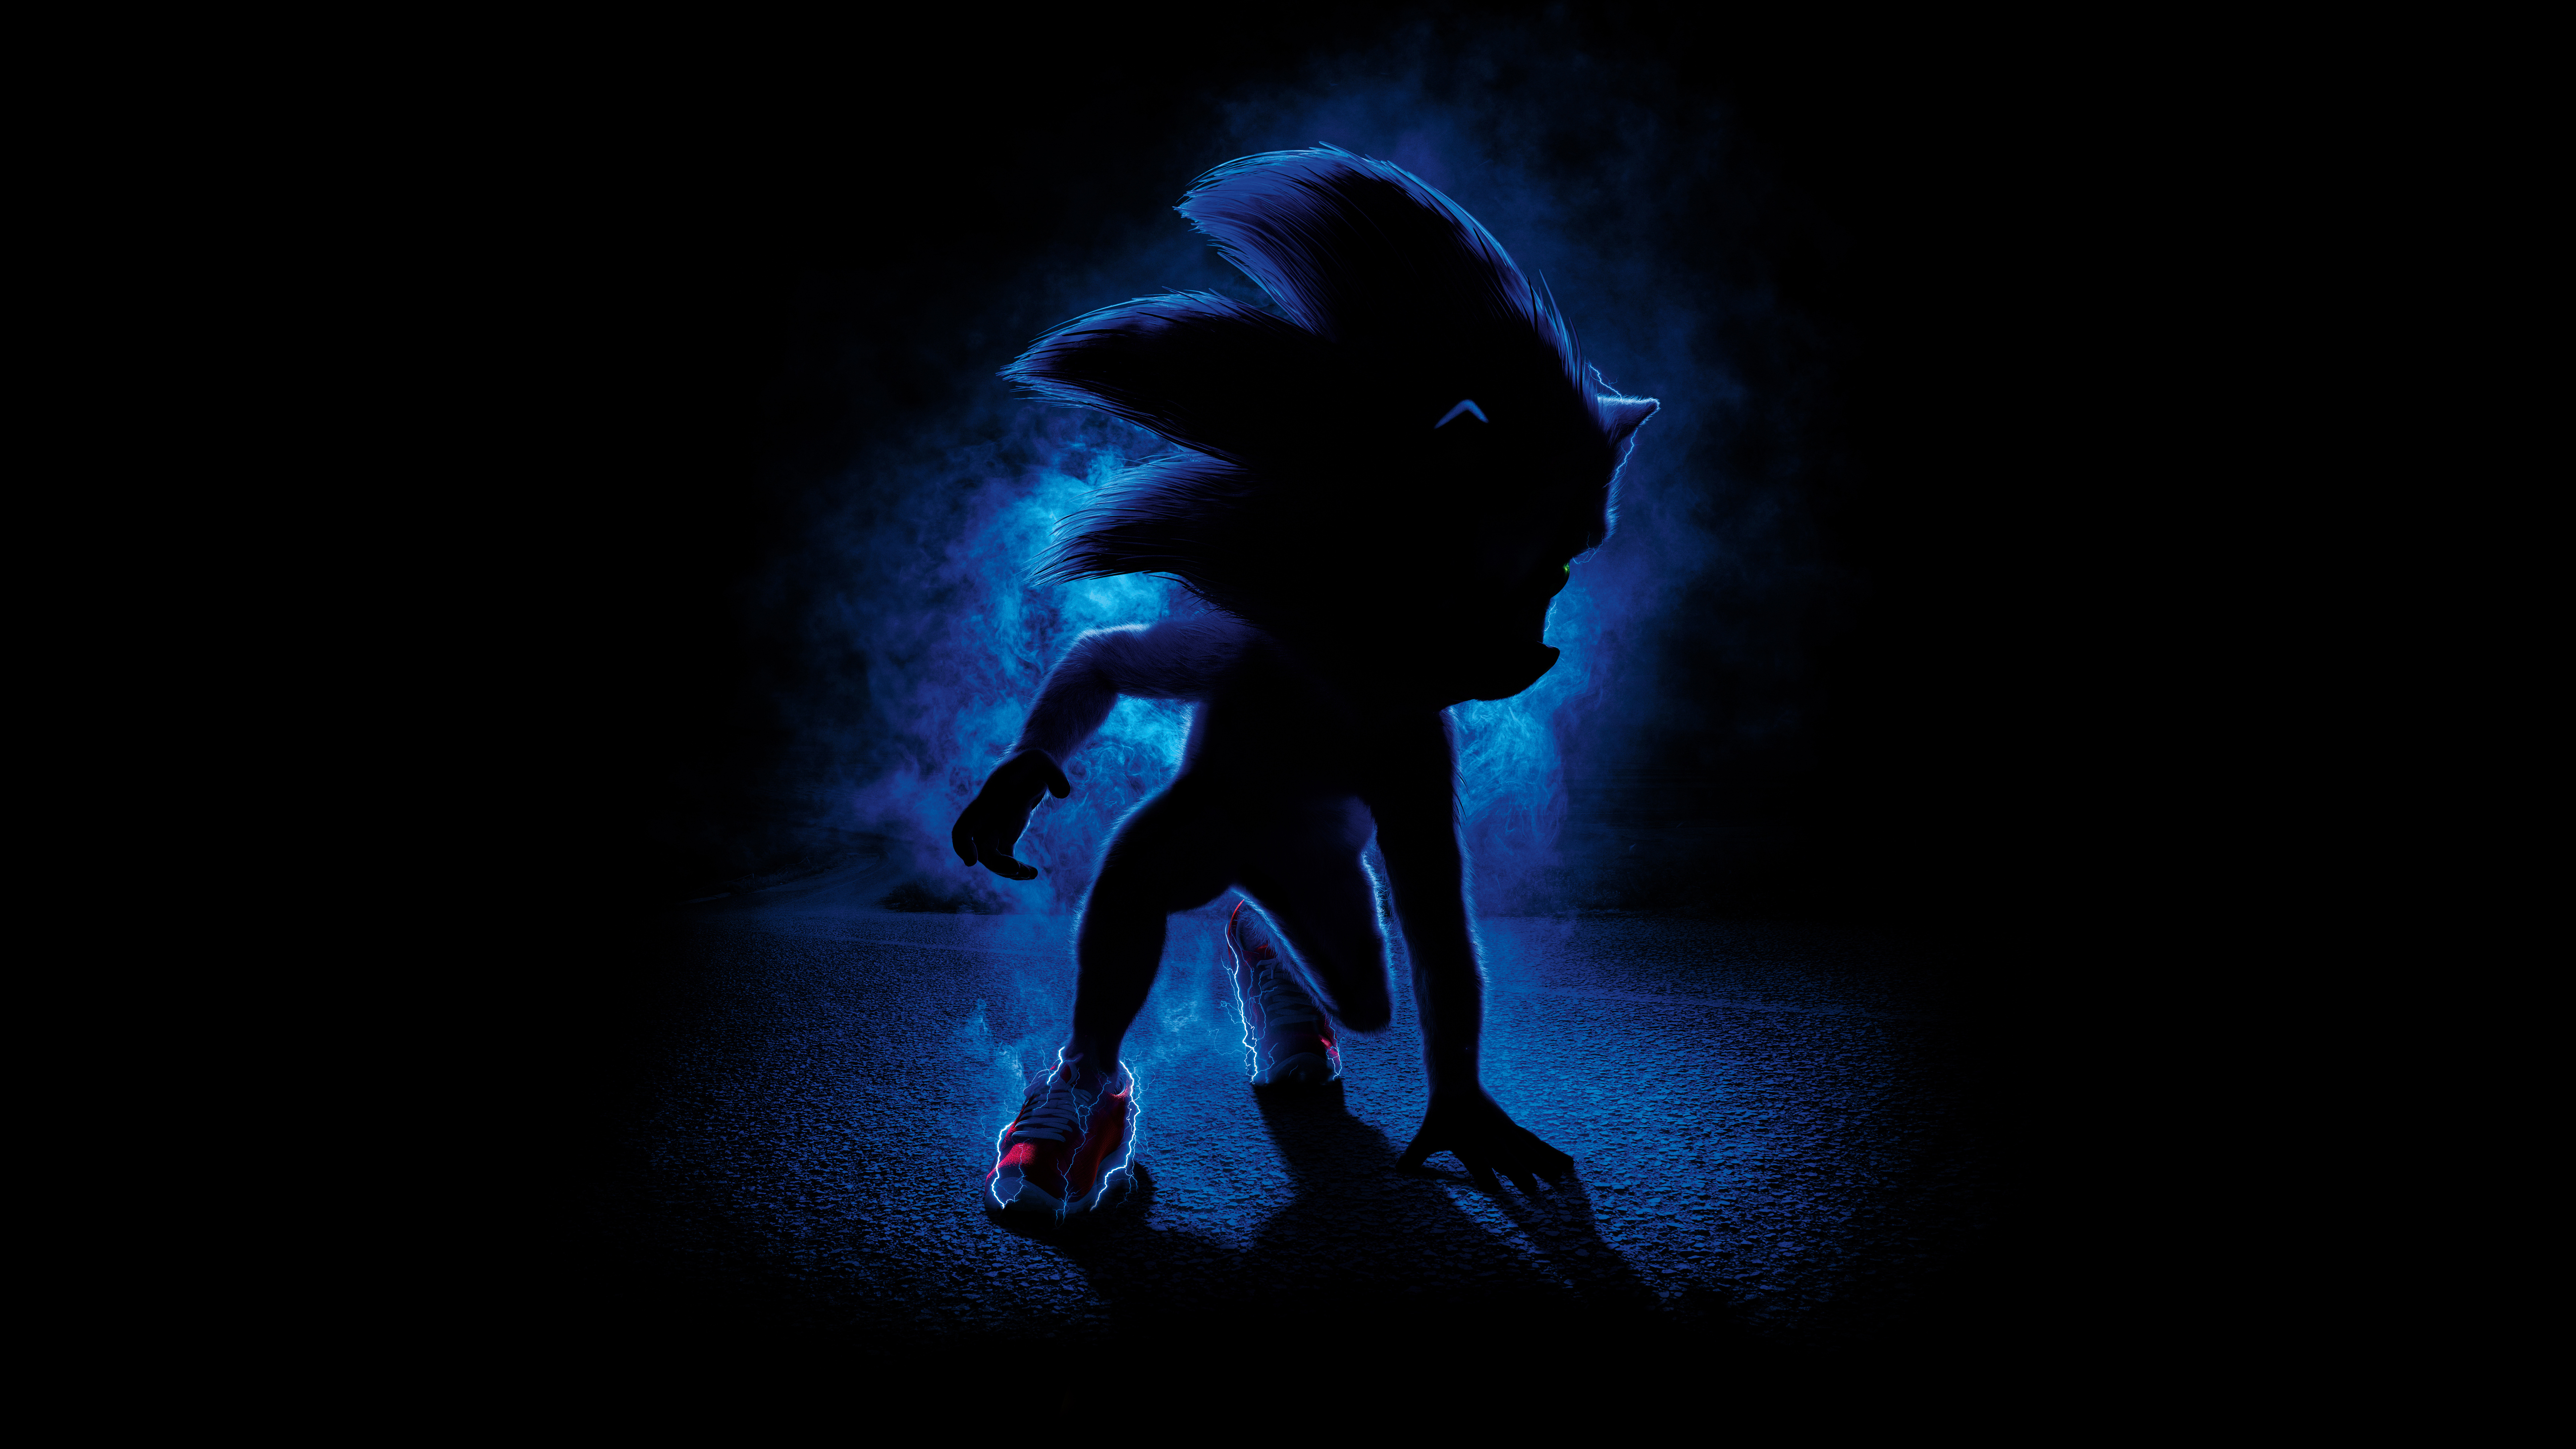 Image: Sonic, the hedgehog, aura, start, silhouette, dark, sneakers, lightning